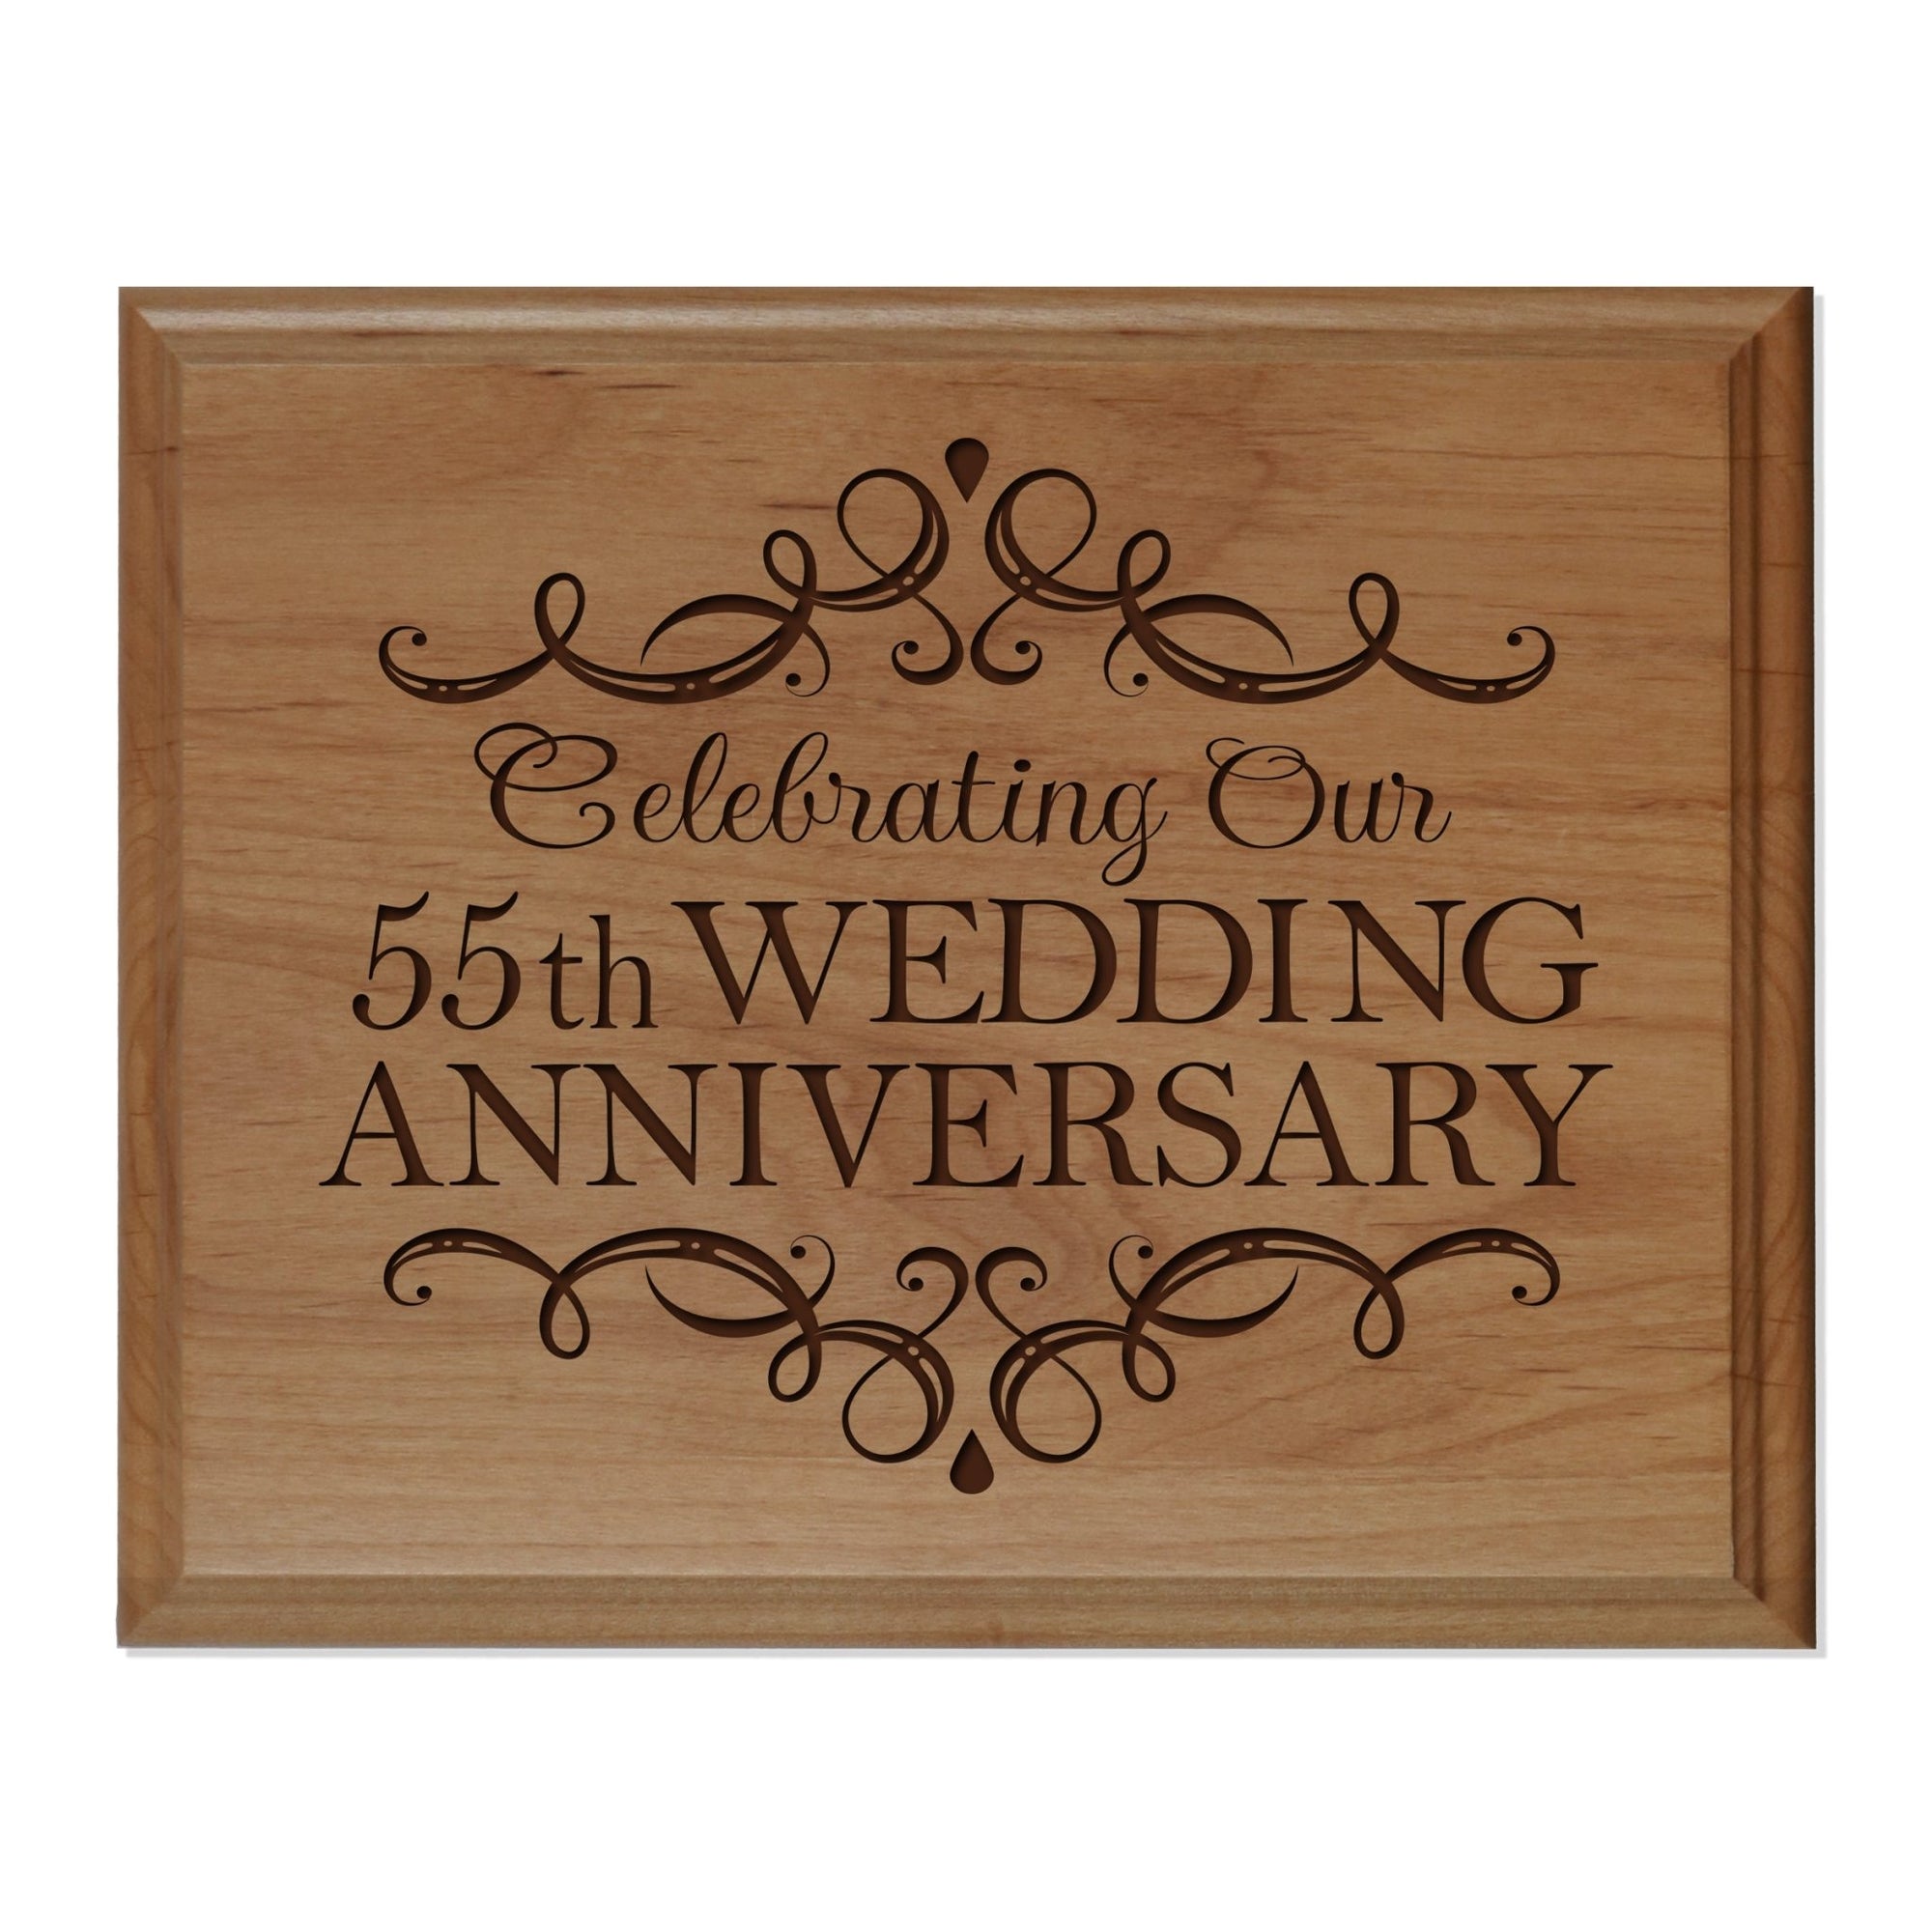 55th Wedding Anniversary Wall Plaque - Celebrating - LifeSong Milestones